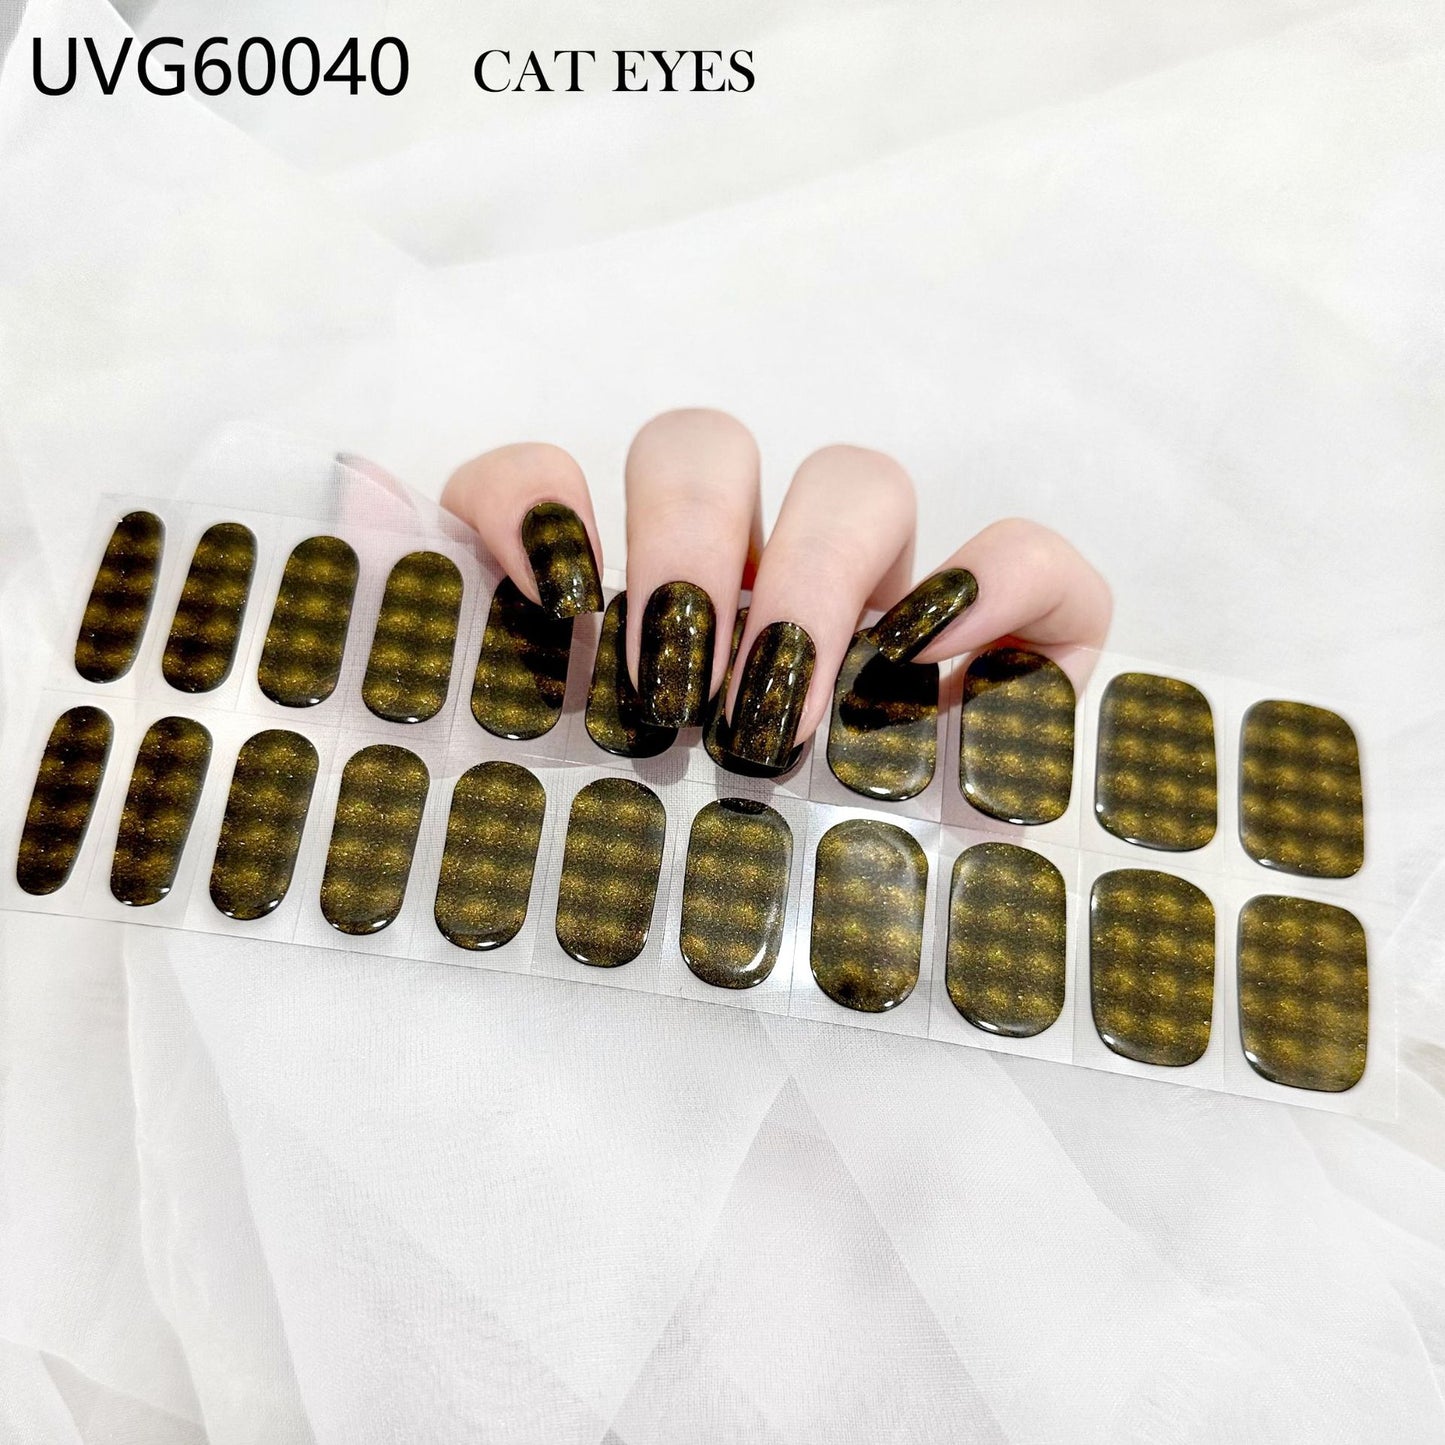 UV Gel Nail Sticker 77 Design Styles